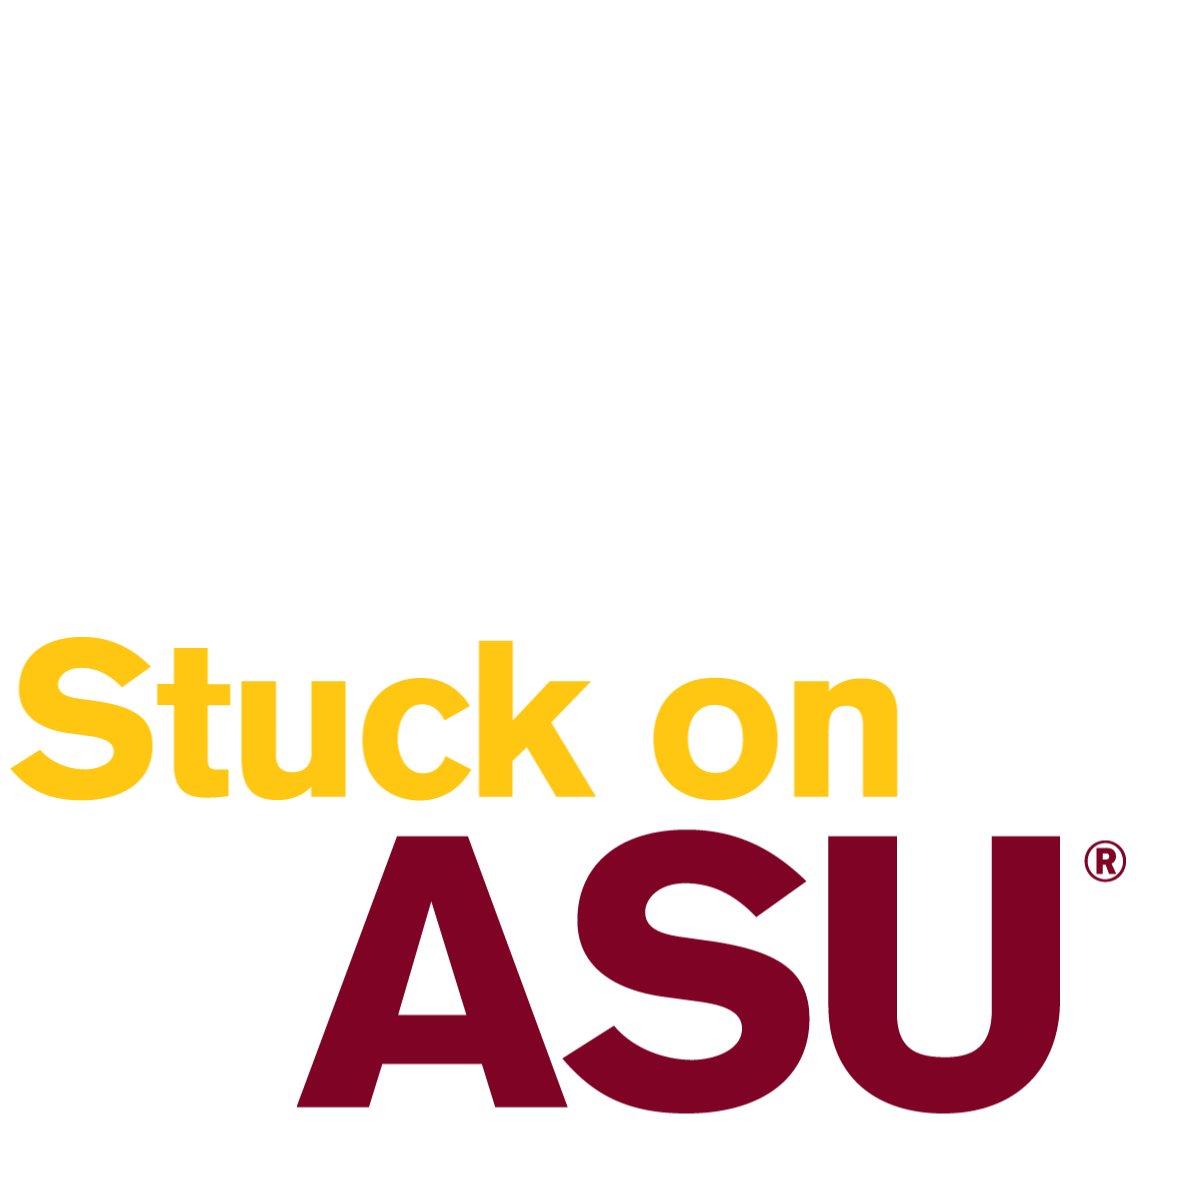 Sun Devils Asu Sticker by Arizona State University